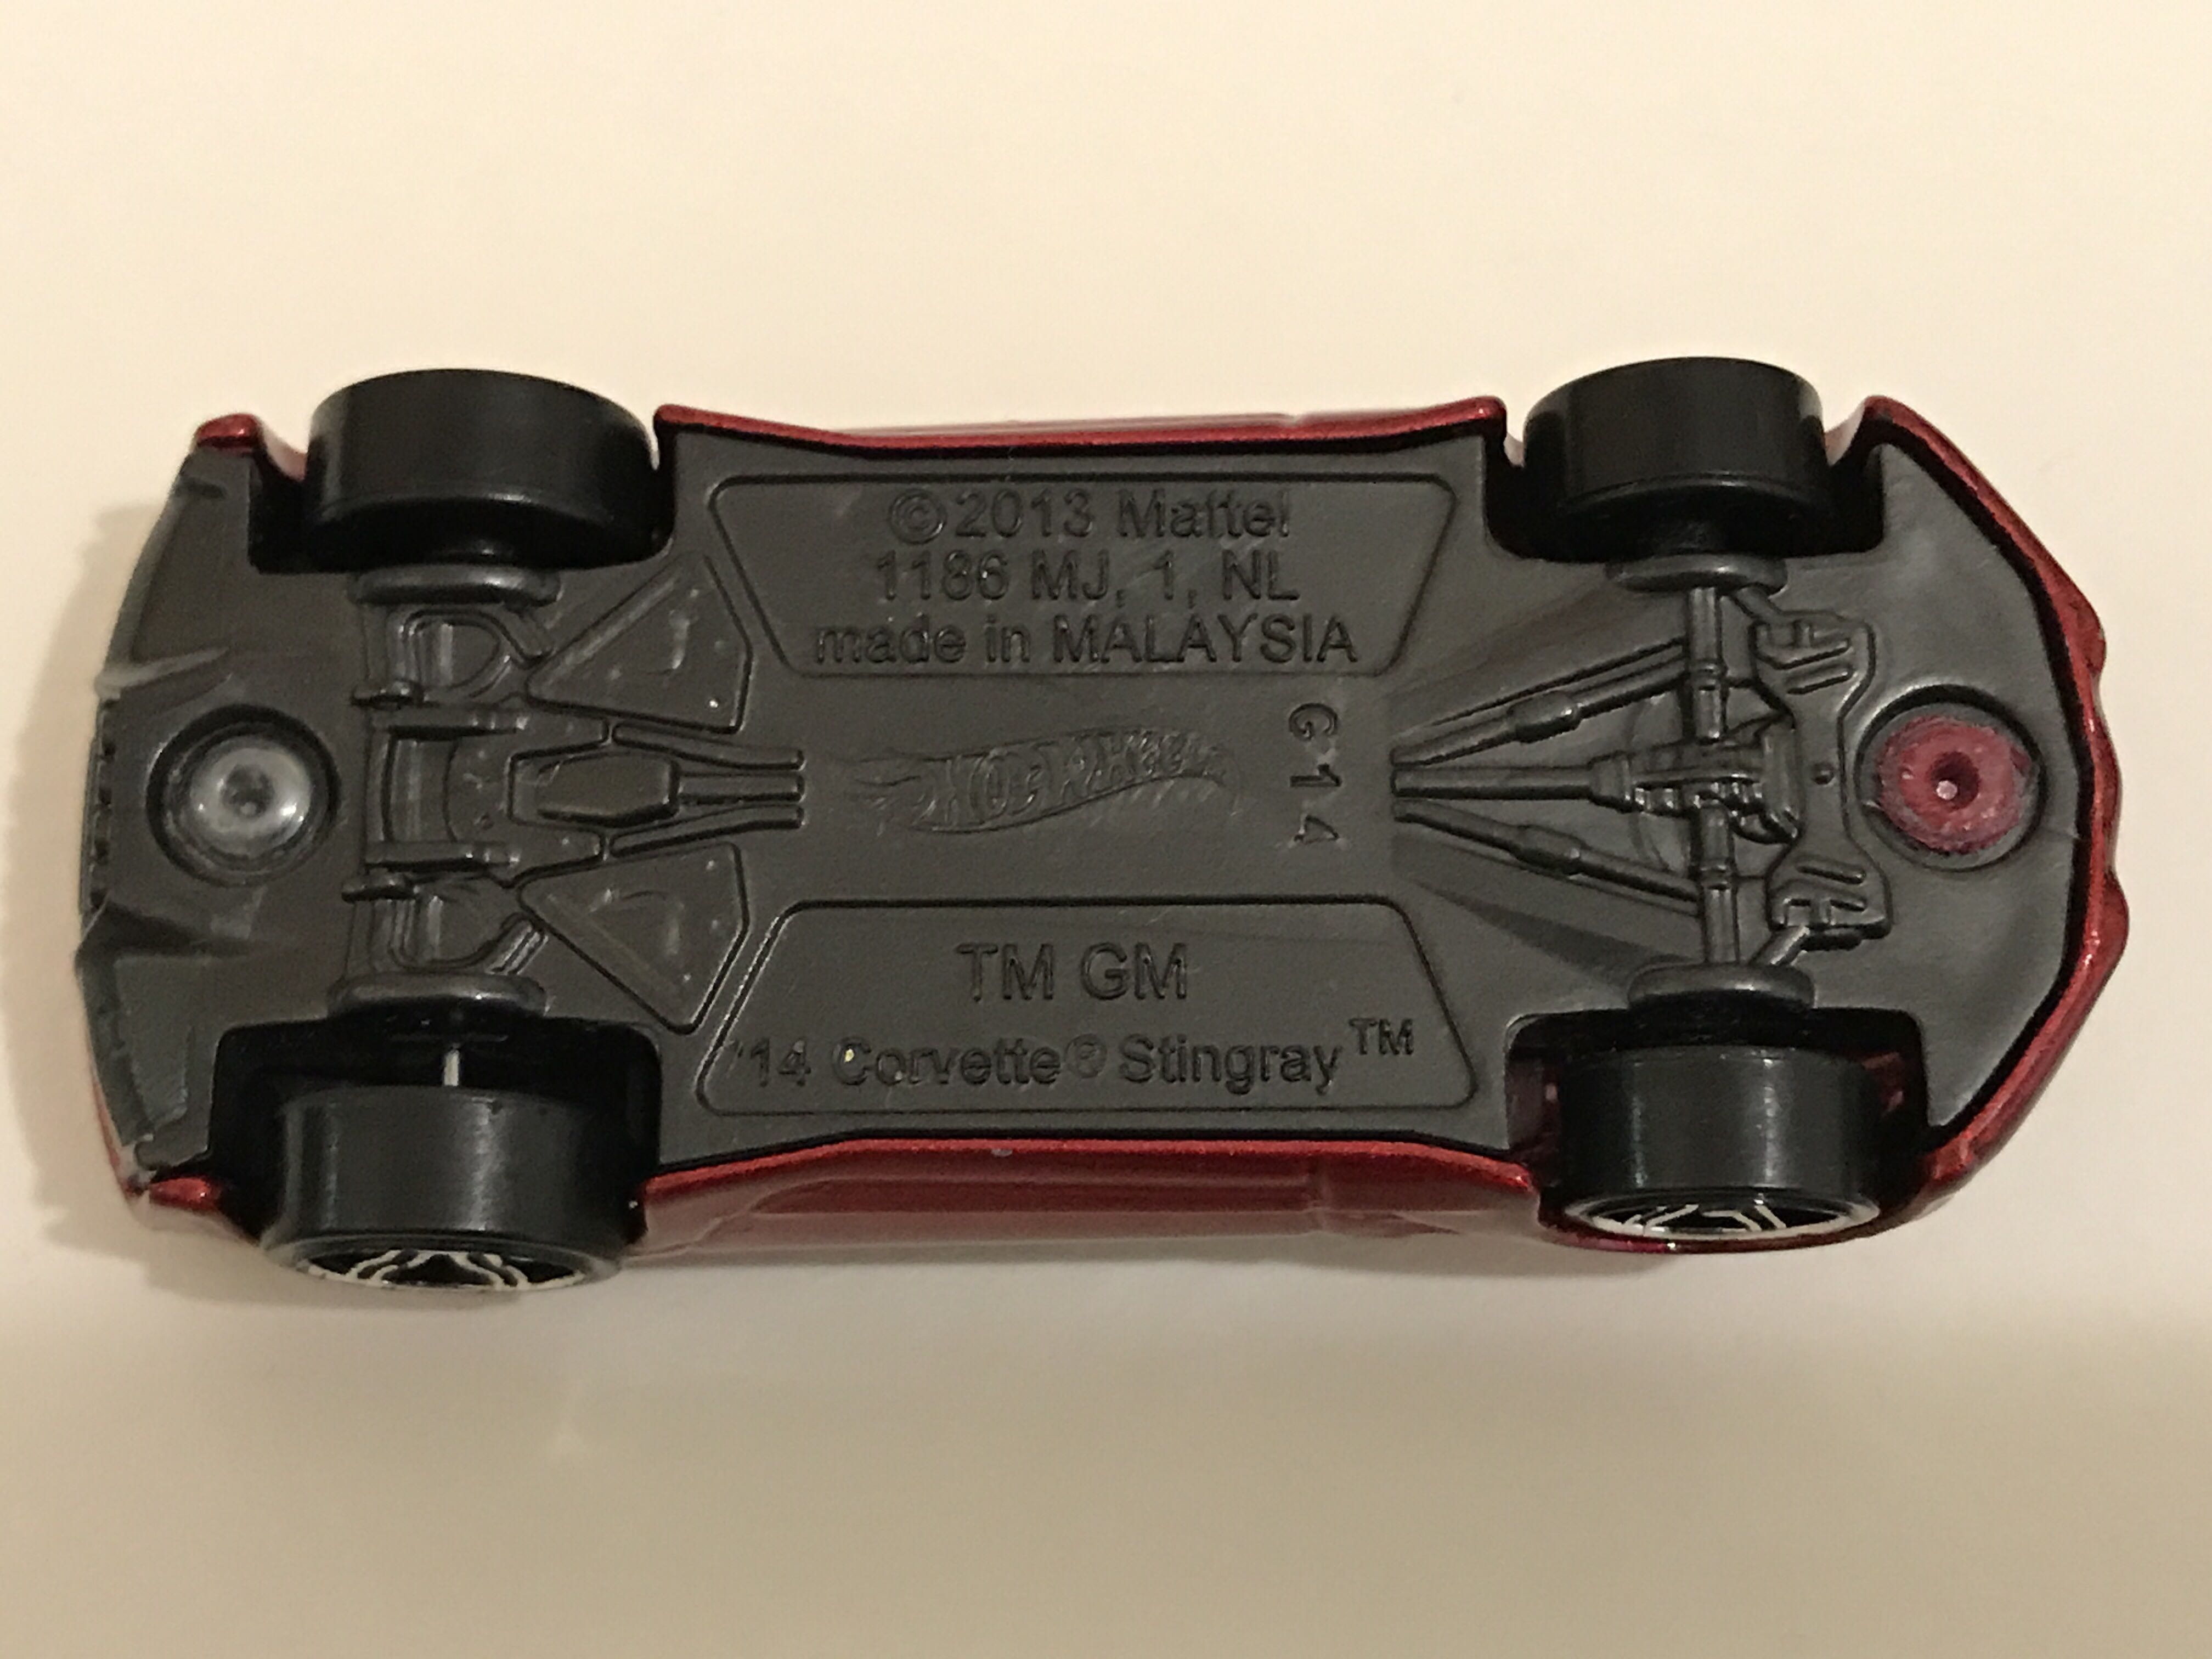 ‘14 Corvette Stingray - 2014 - HW Workshop - Then & Now toy car collectible - Main Image 4